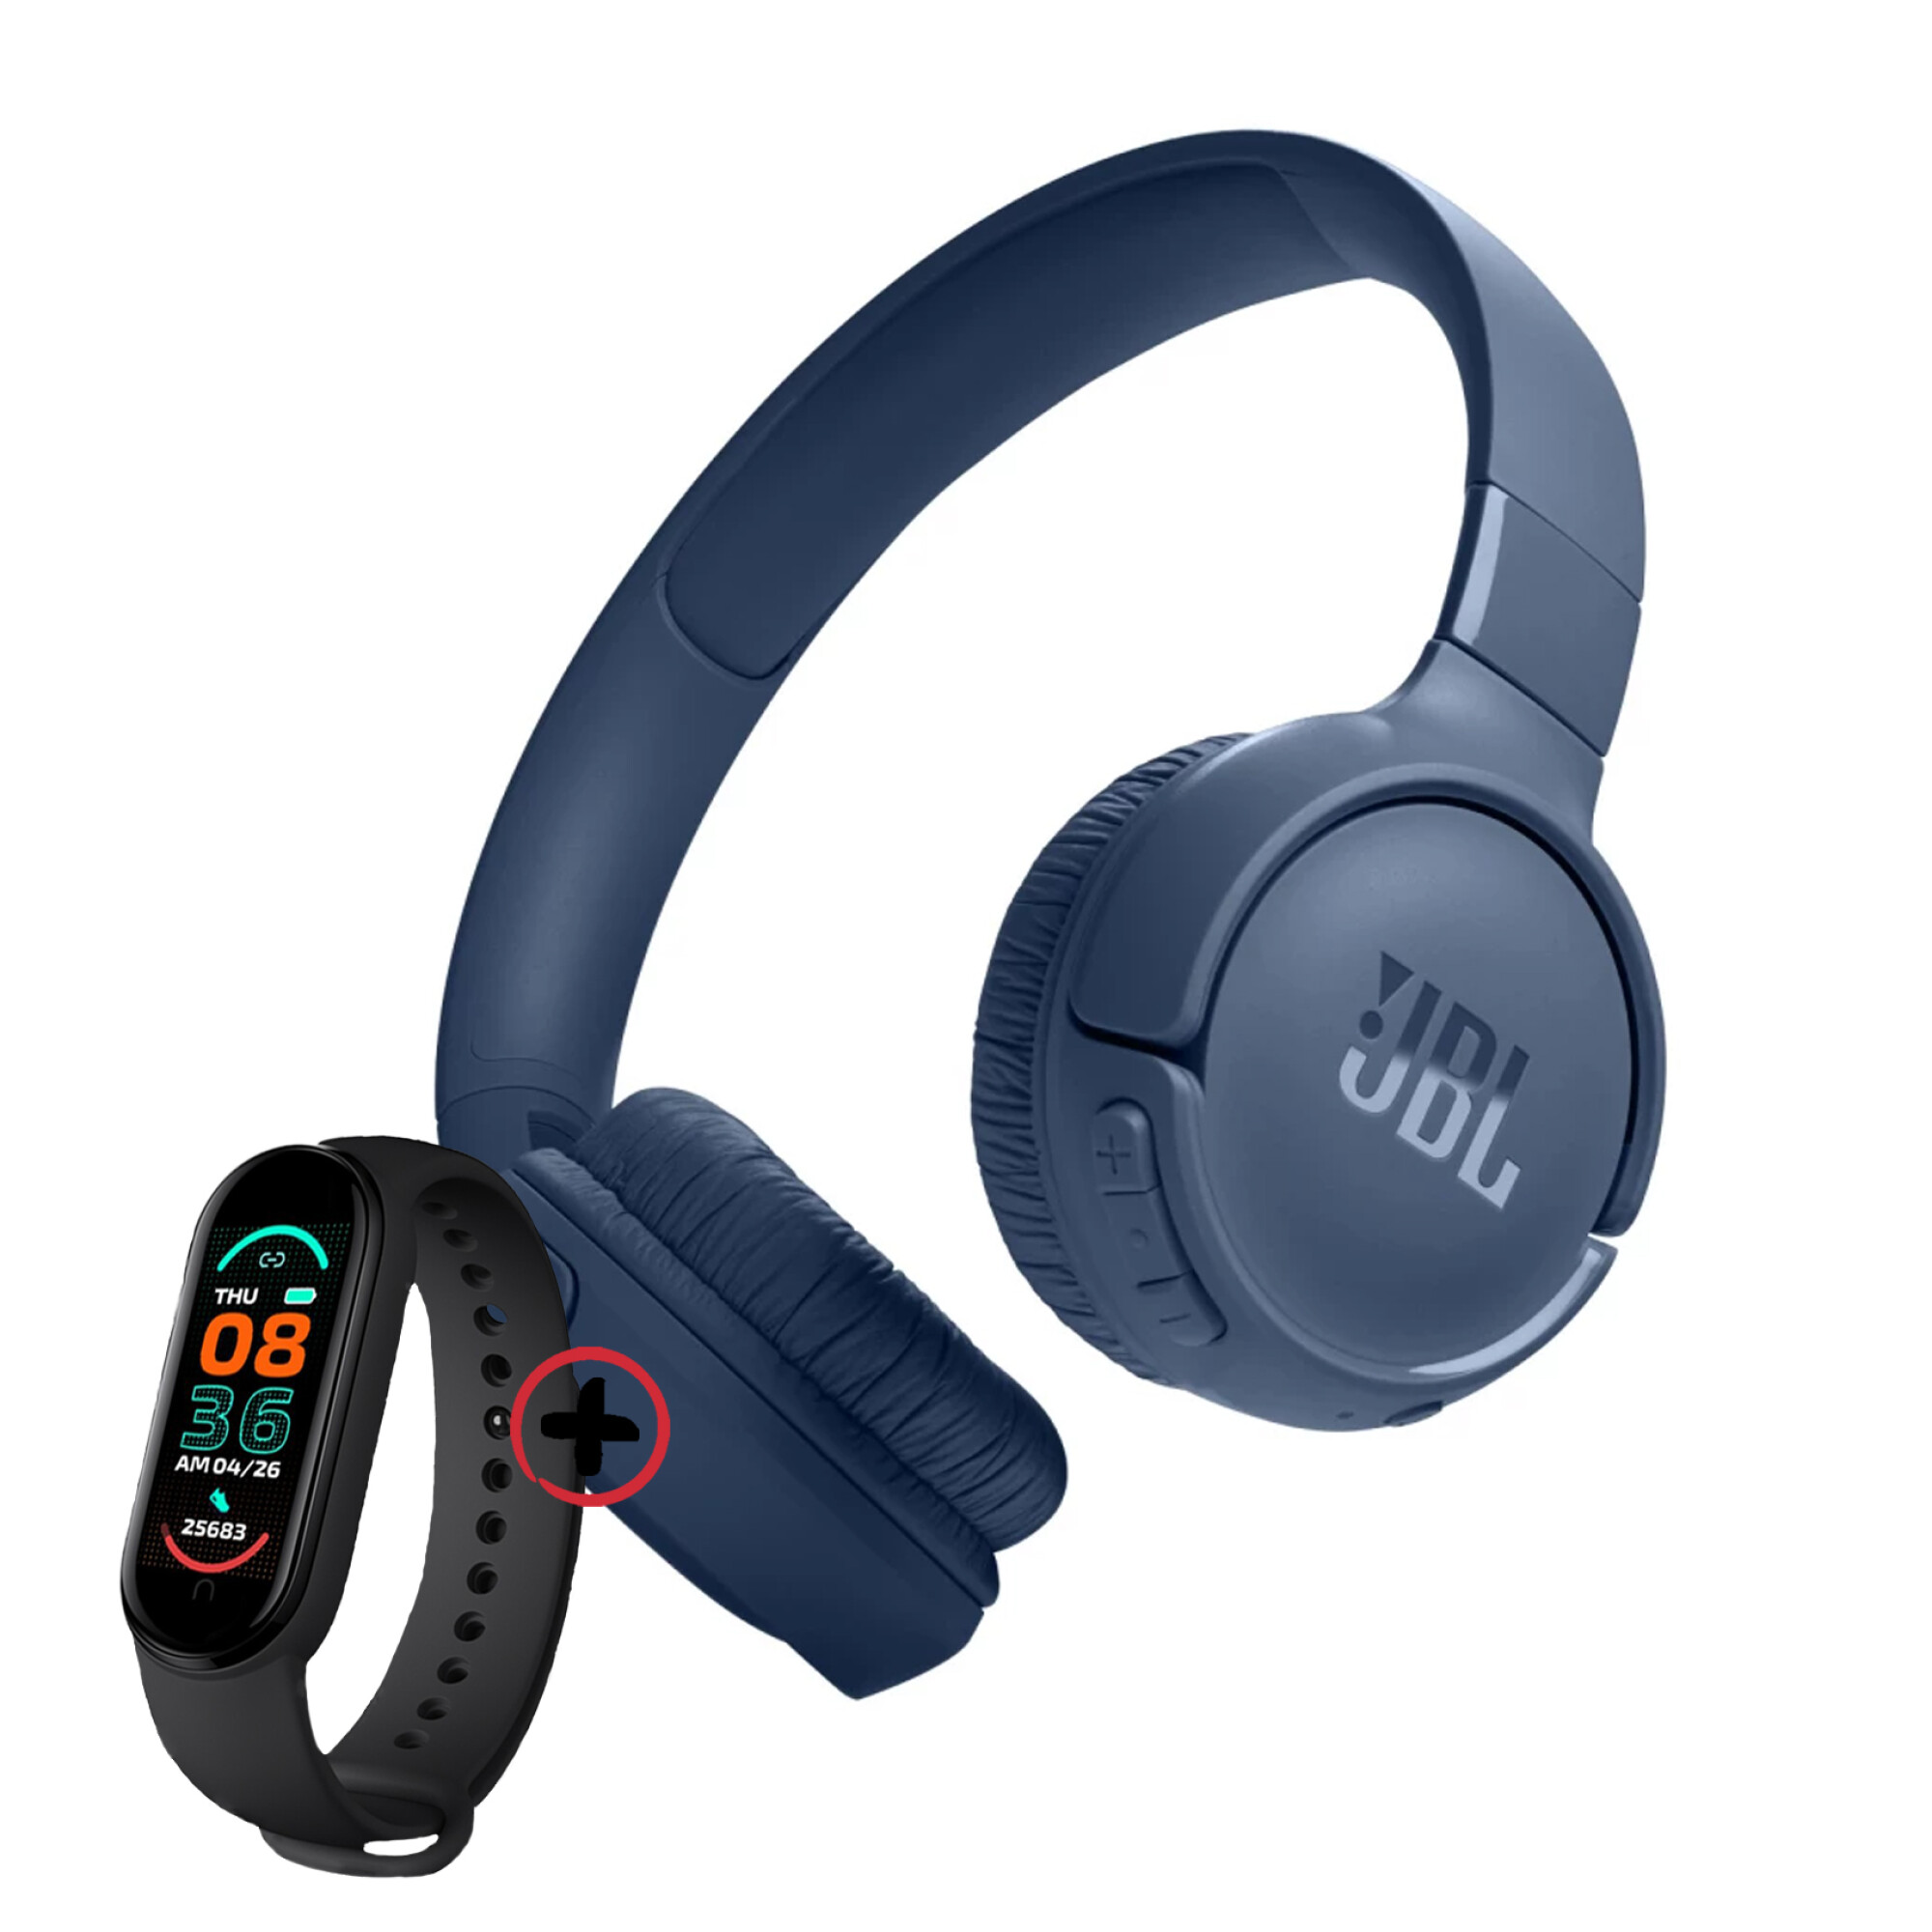 Audífonos Jbl Tune 520bt Inalámbricos Bluetooth Azul + Smartwatch — Black  Dog